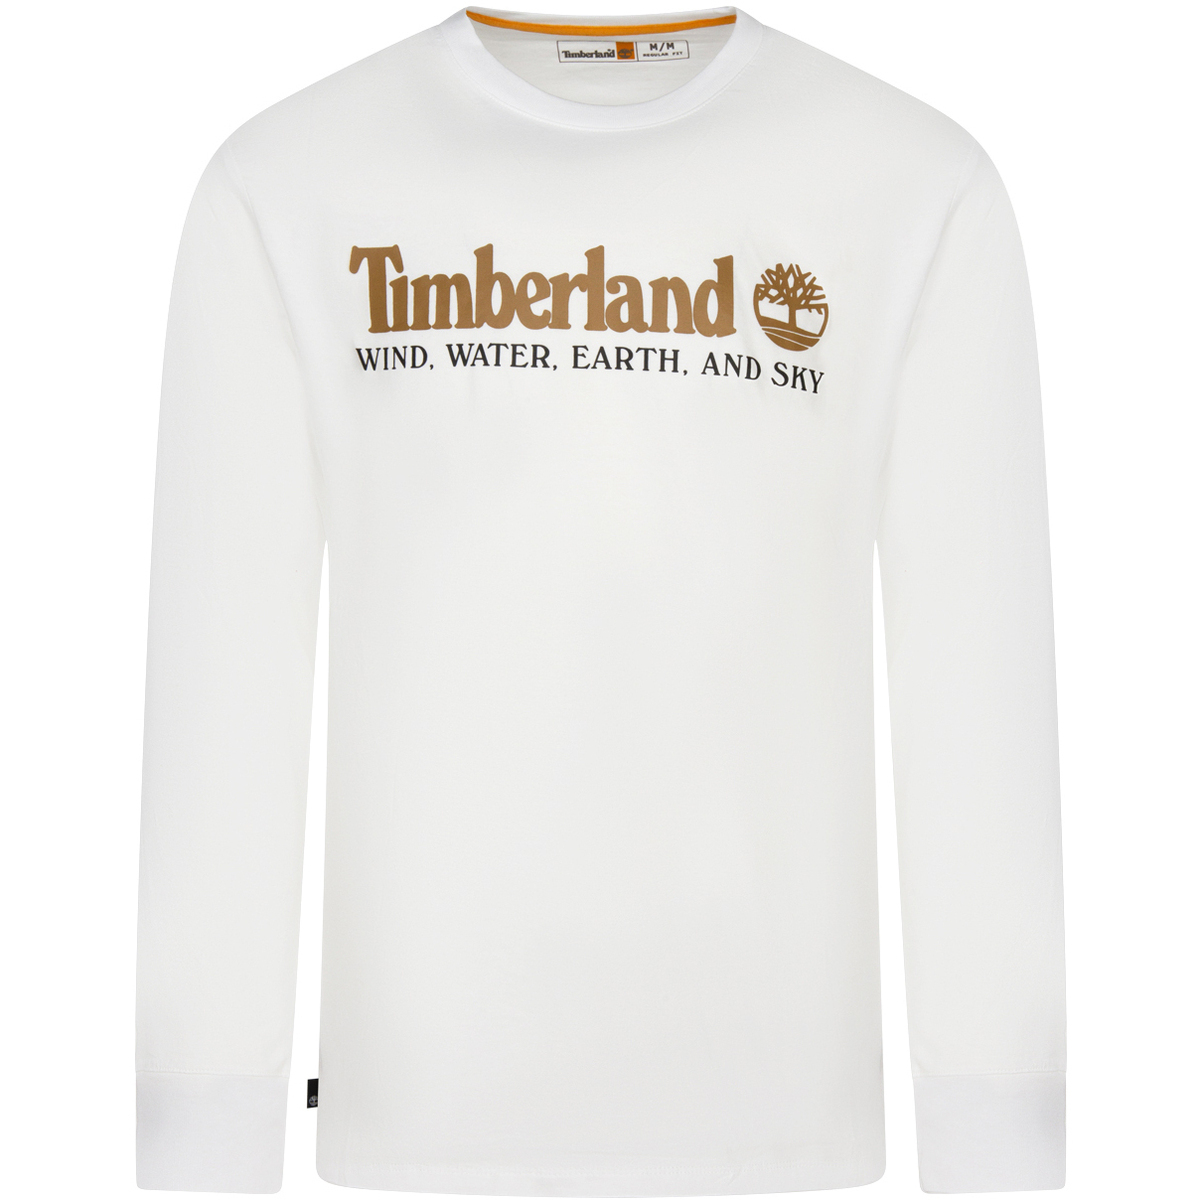 Vêtements Homme Timberland b103 rose Timberland T-shirt col rond coton Blanc